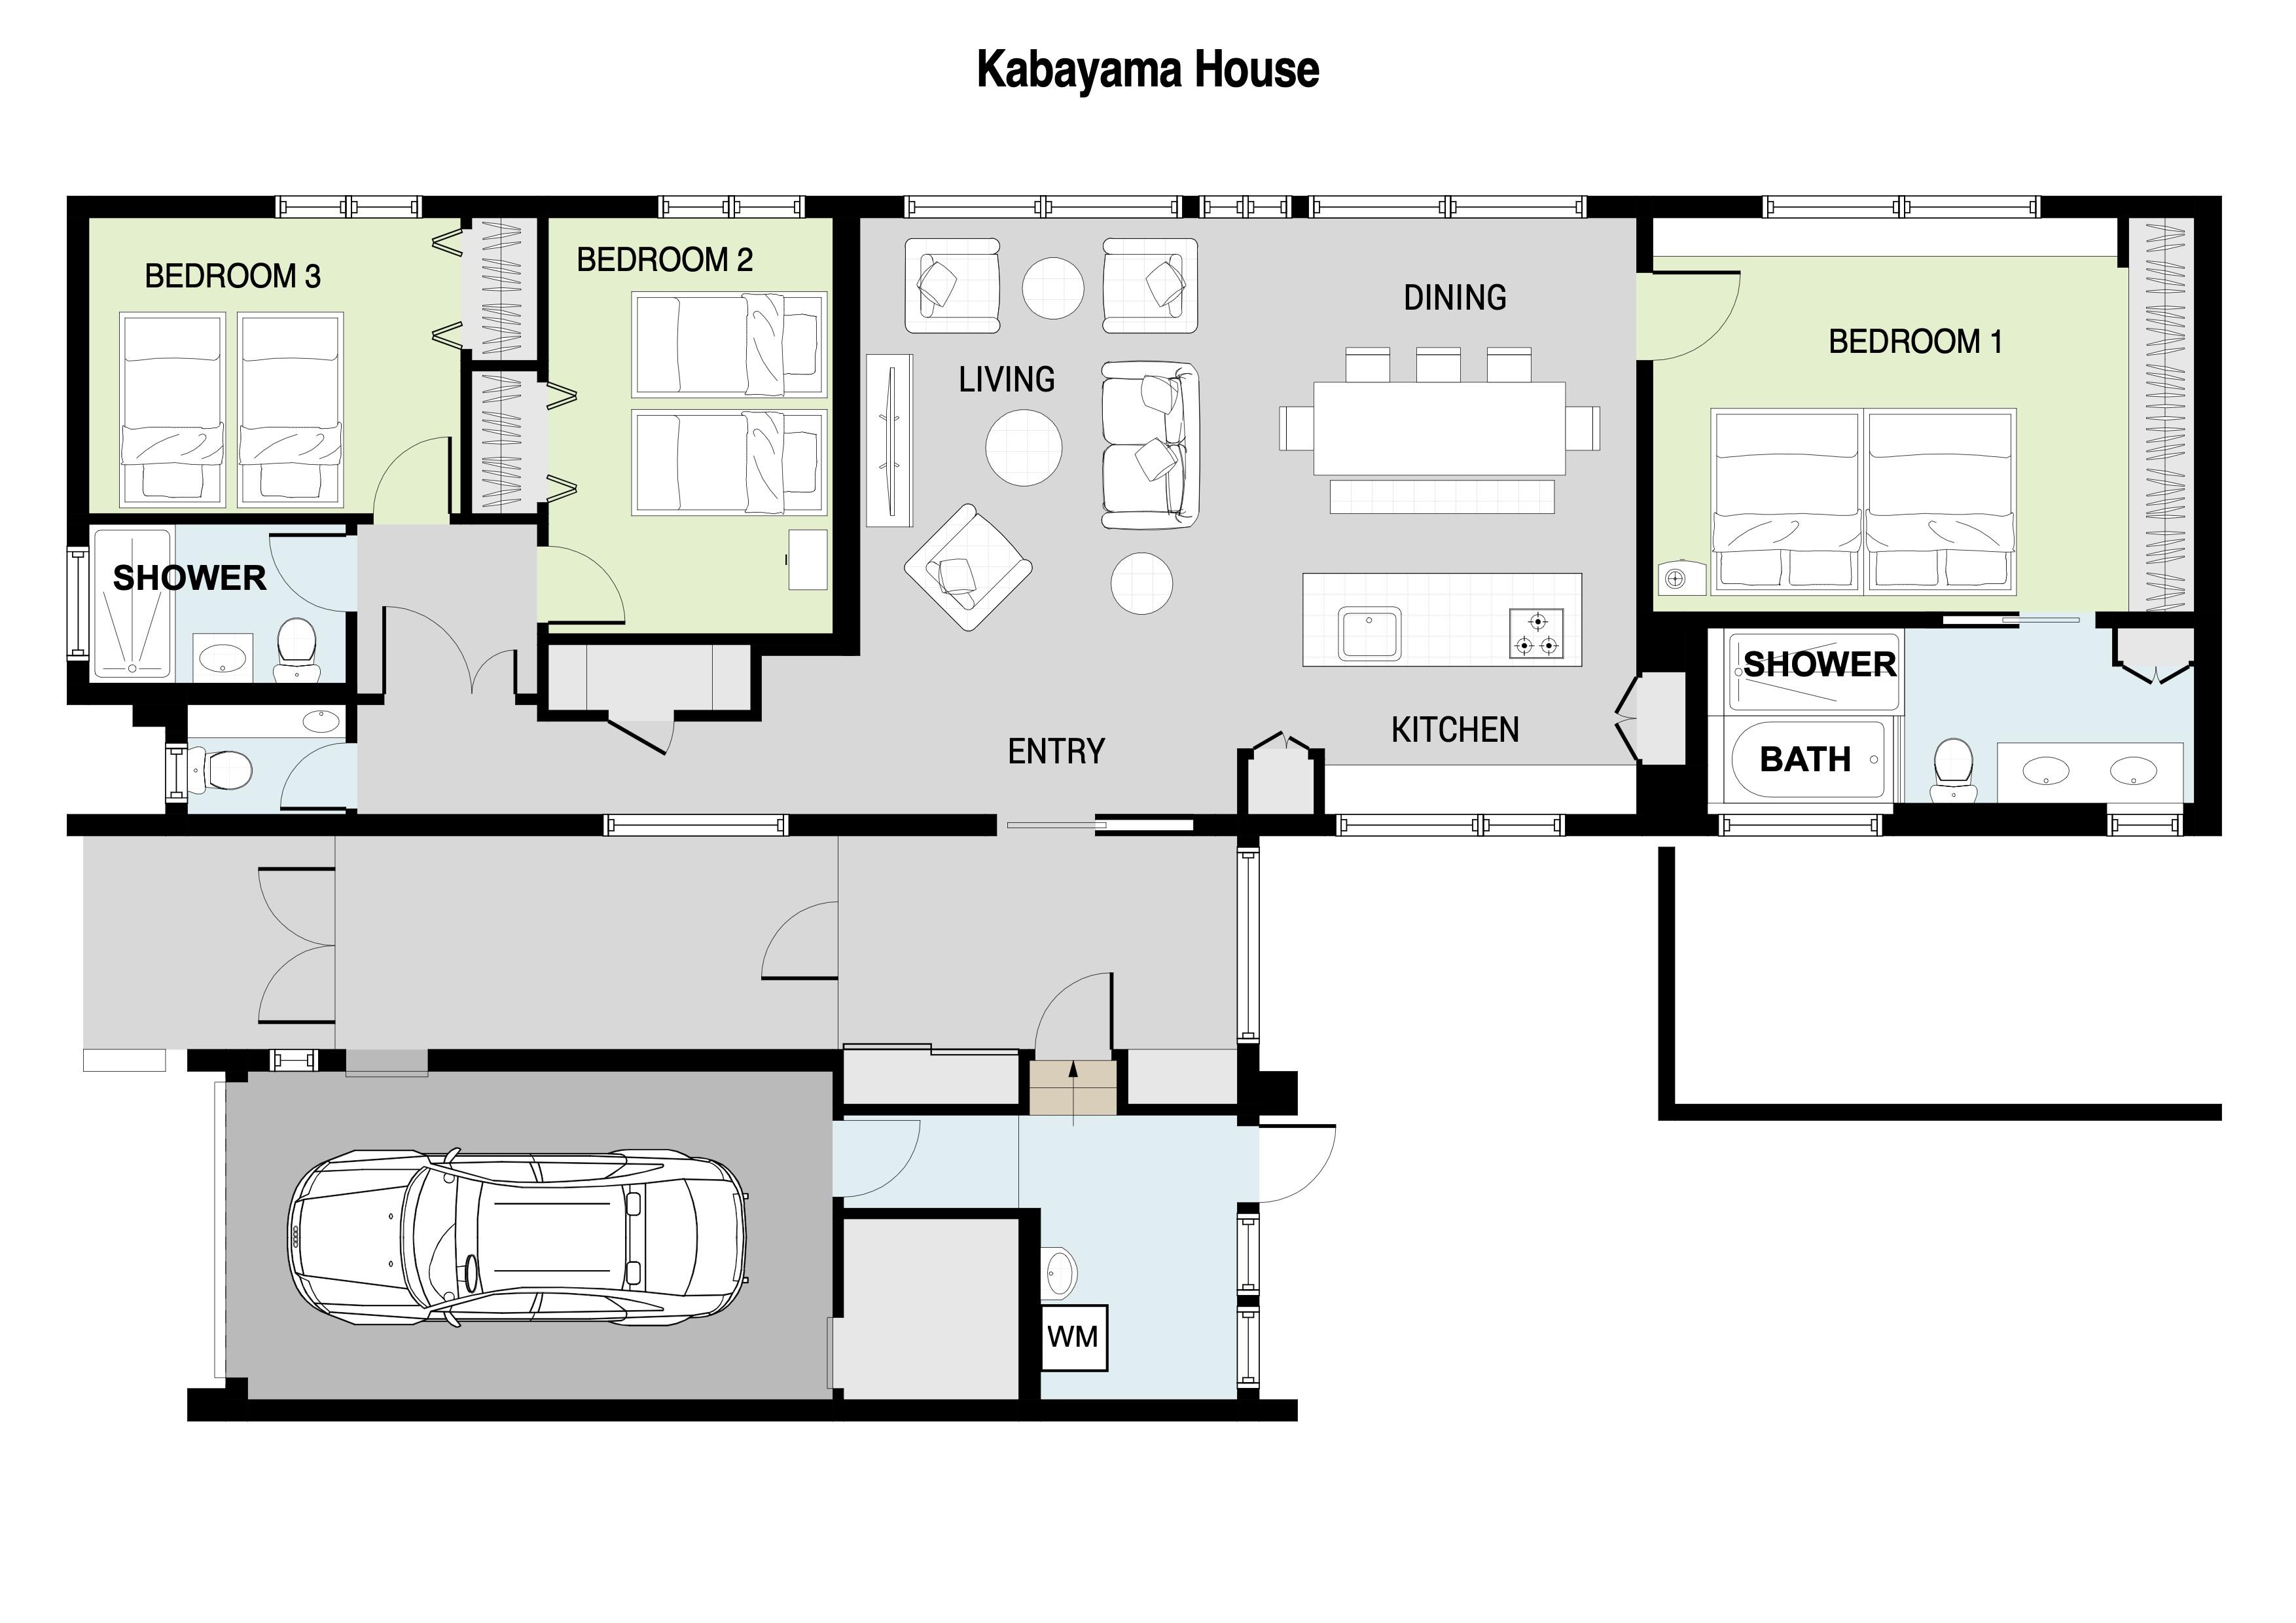 Kabayama House Floor Plan